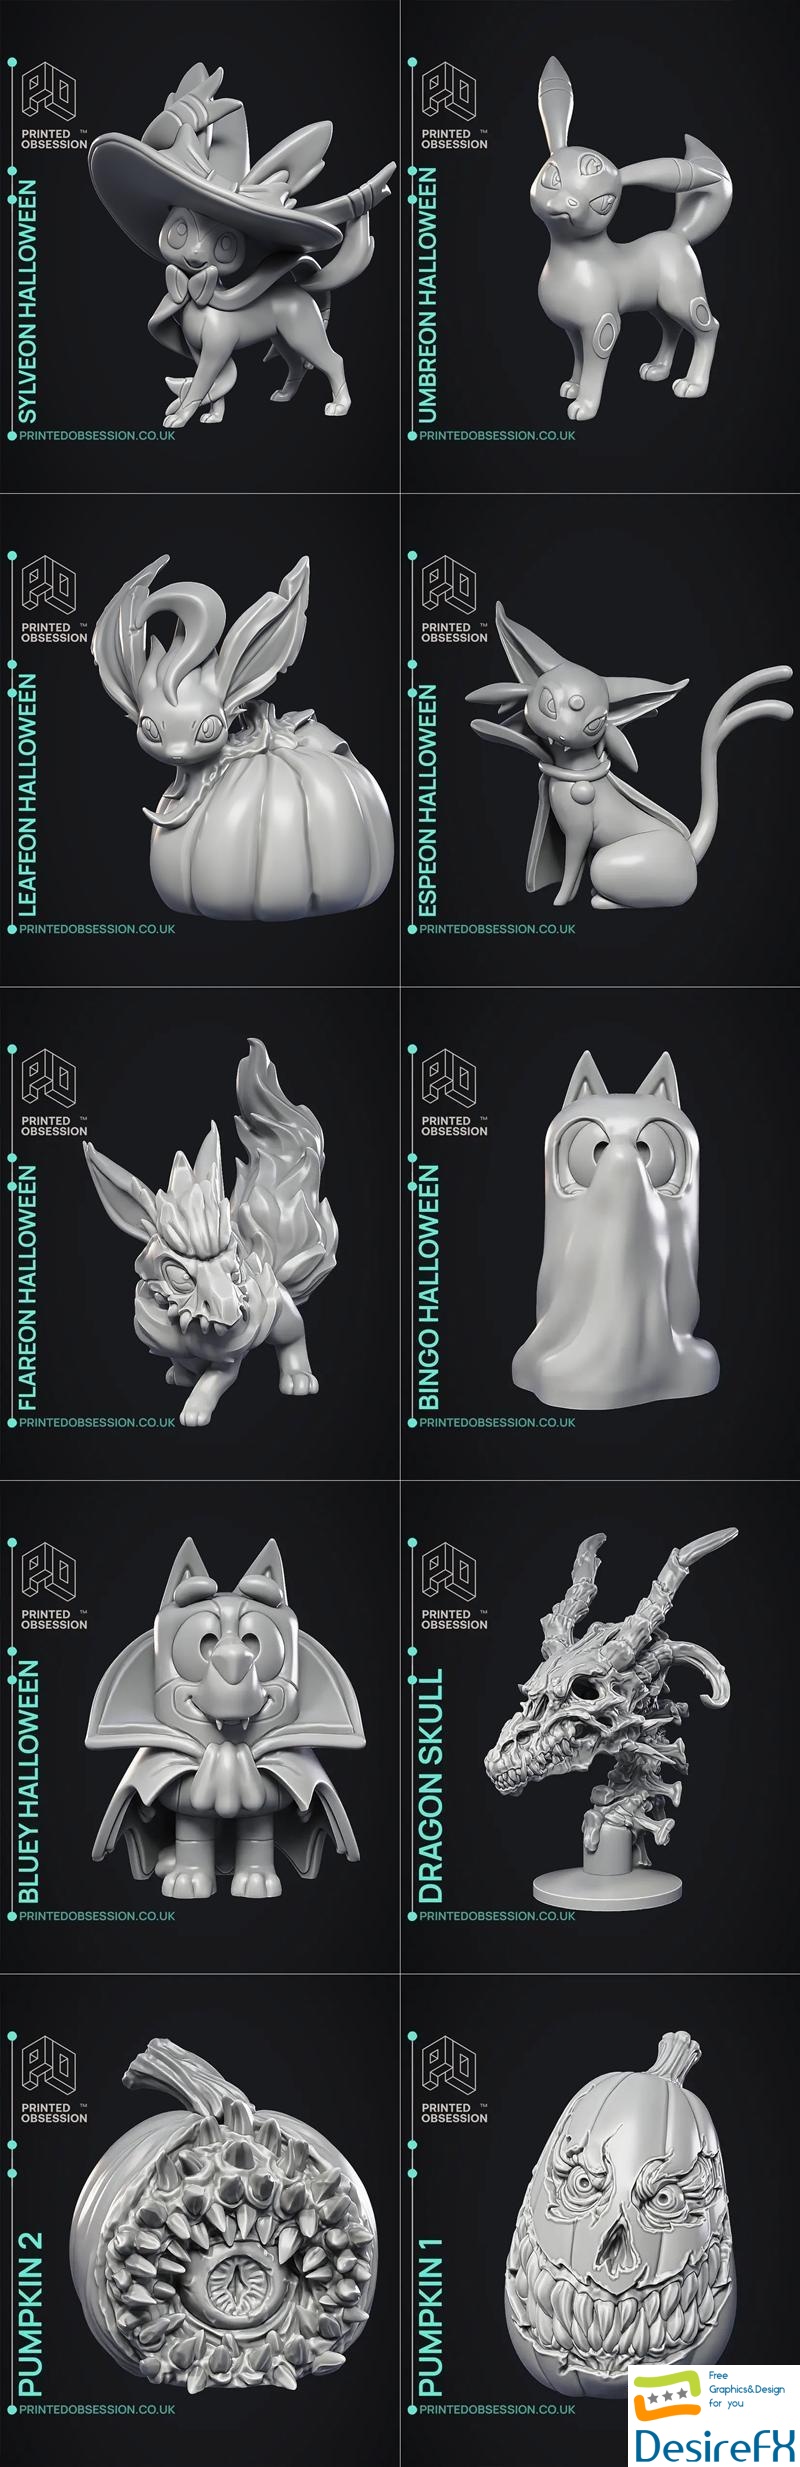 Printed Obsession - Halloween Set 3D Print